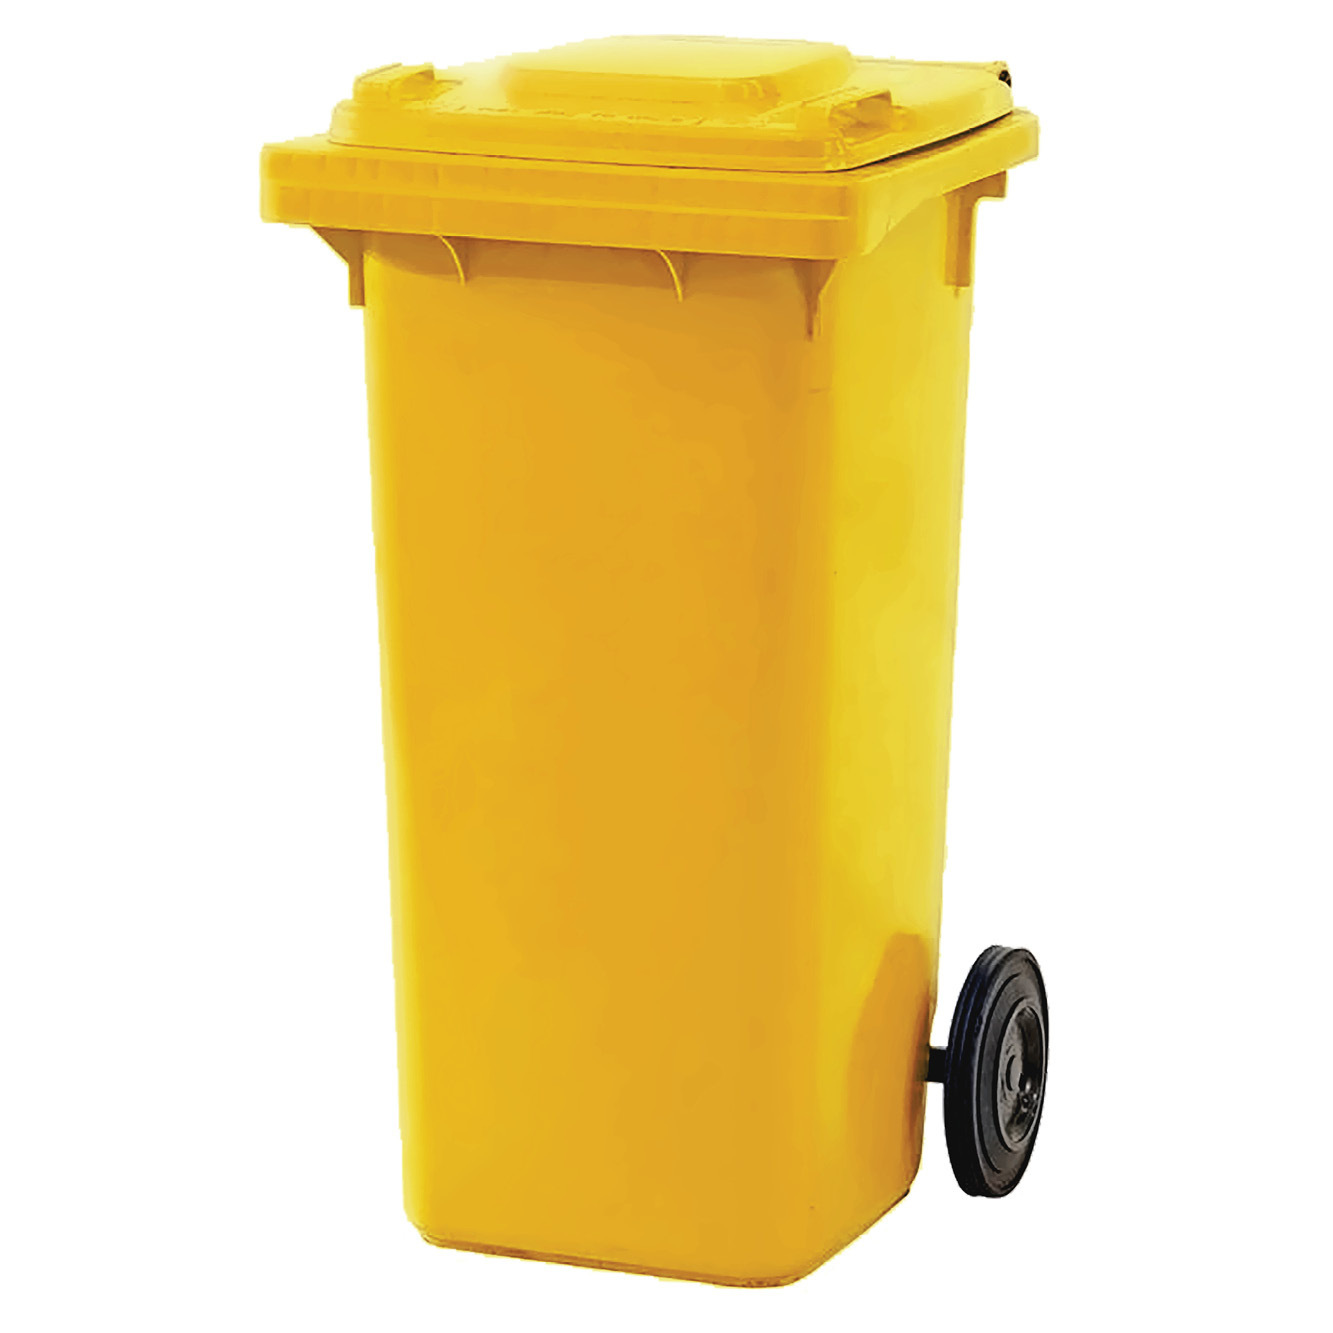 Plastic Wheelie Bin 120 Litre- Yellow (480x550x940mm - WxDxH)